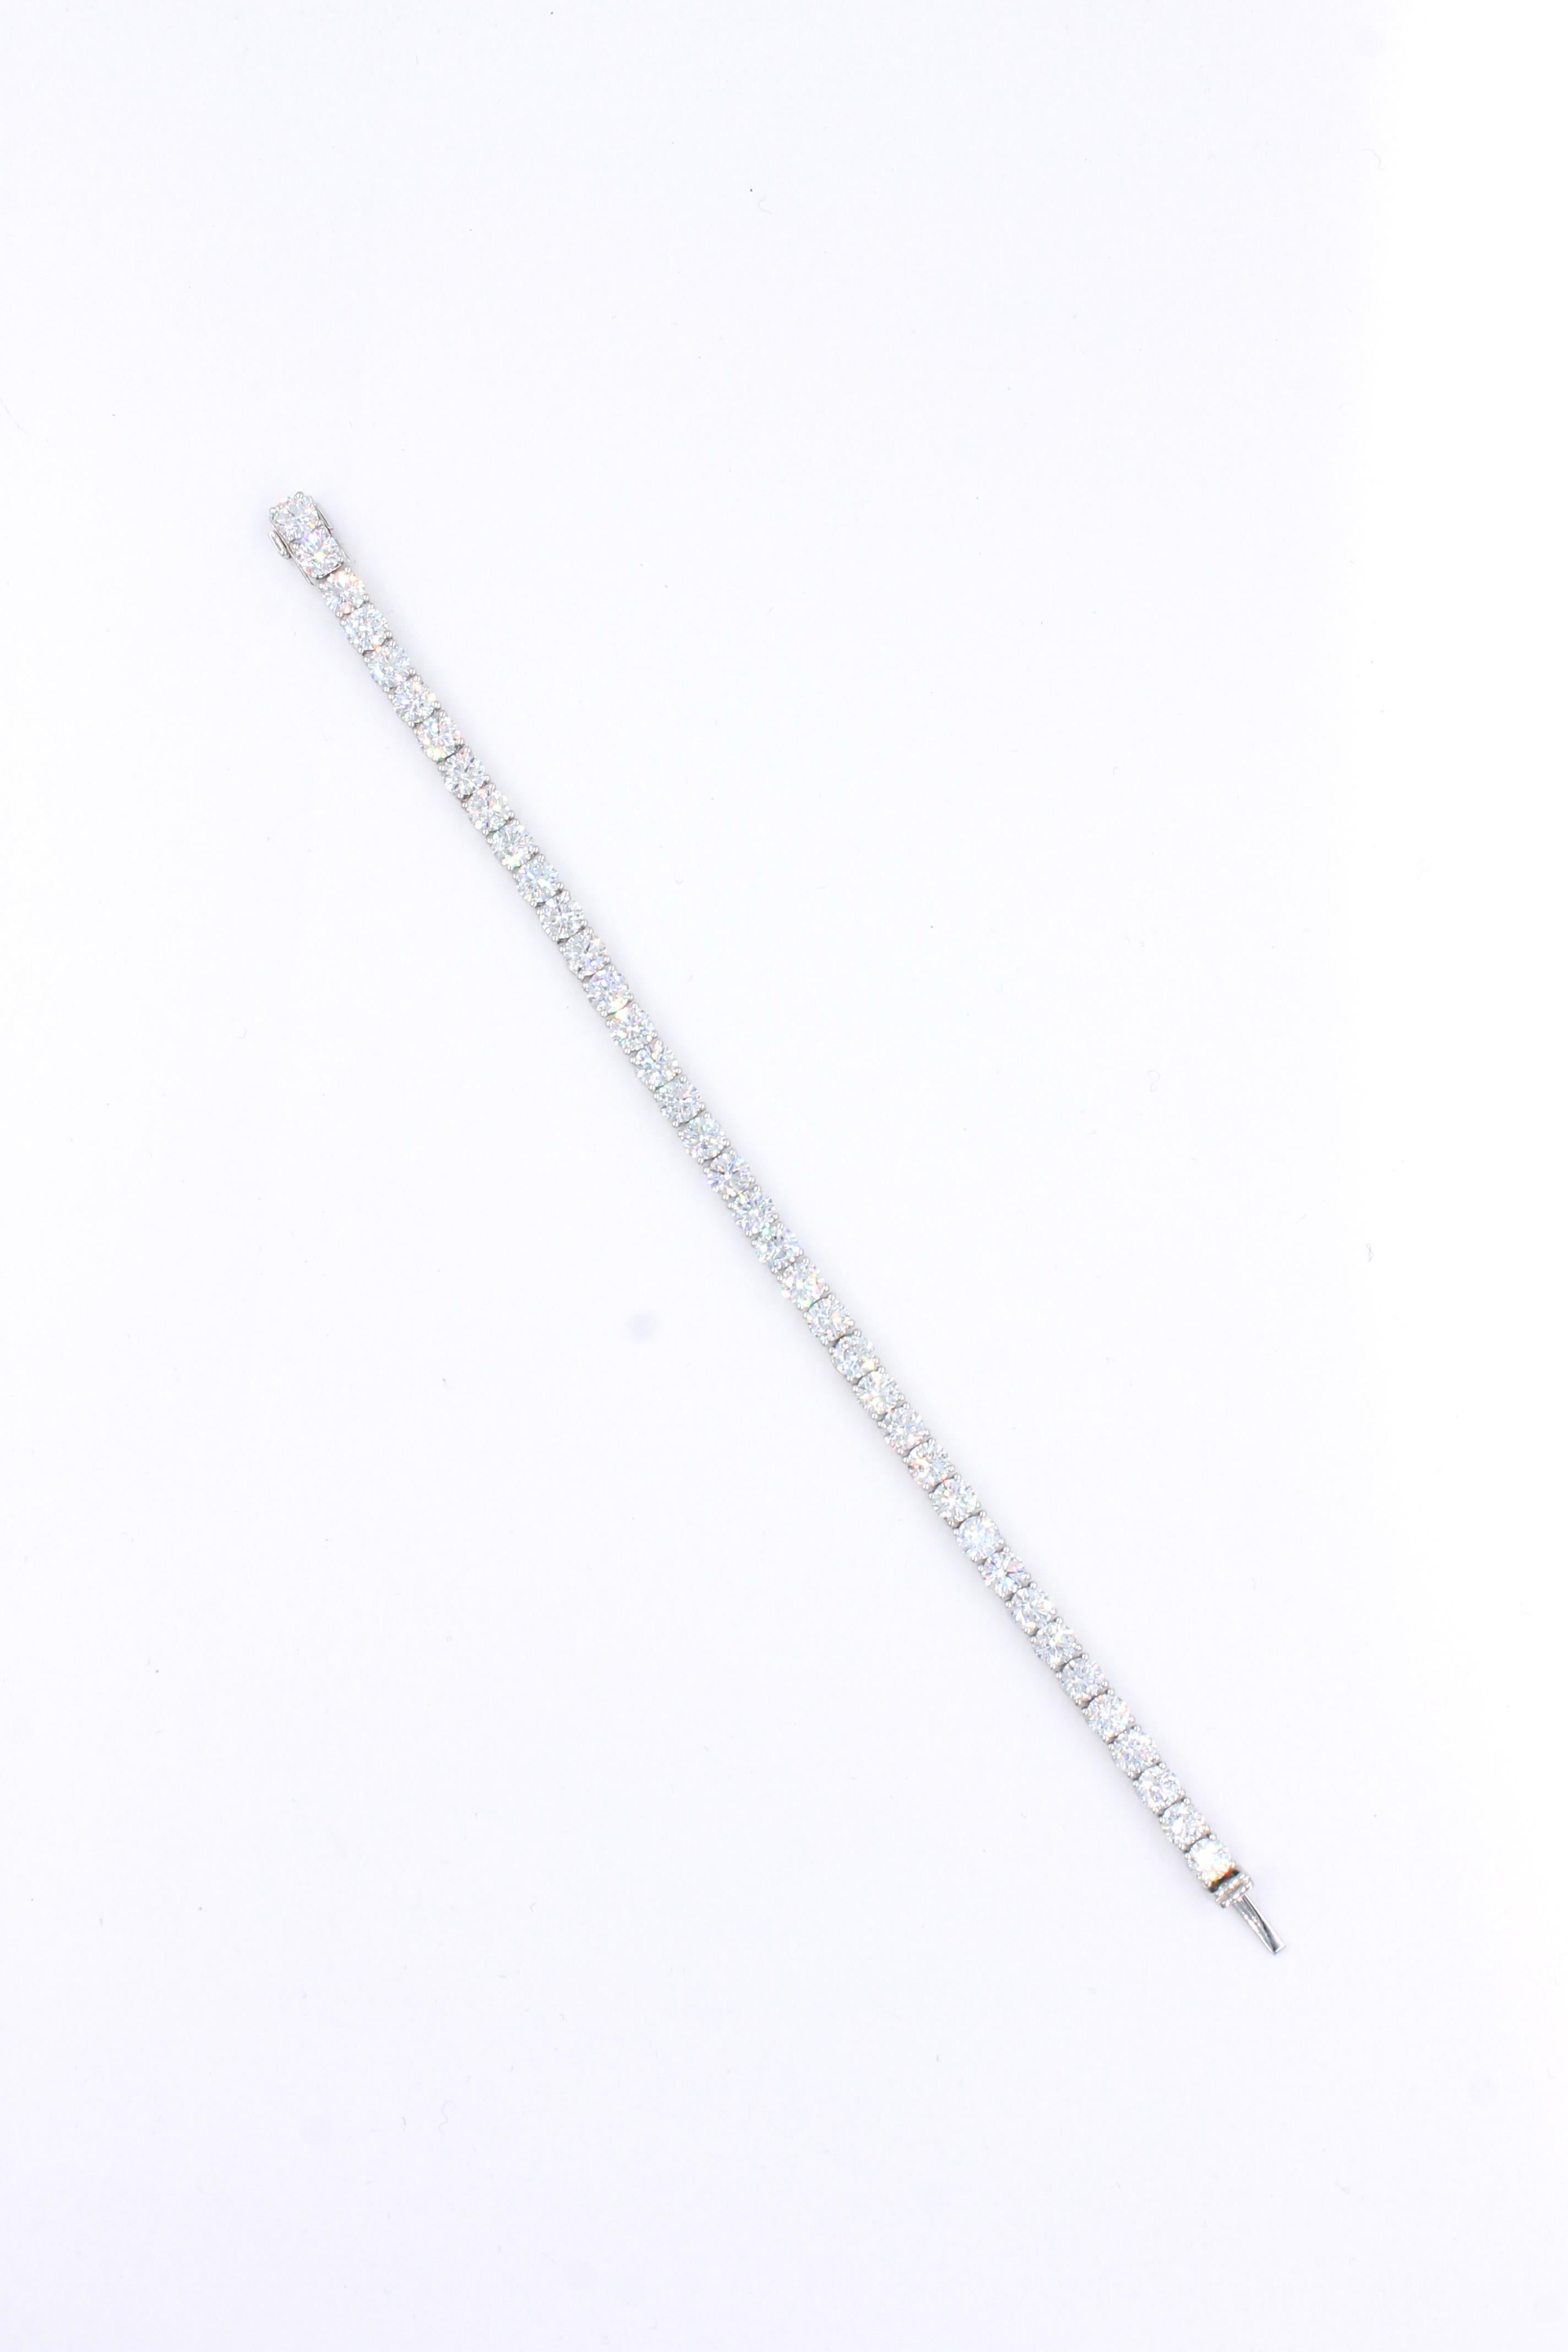 11 carat diamond tennis bracelet